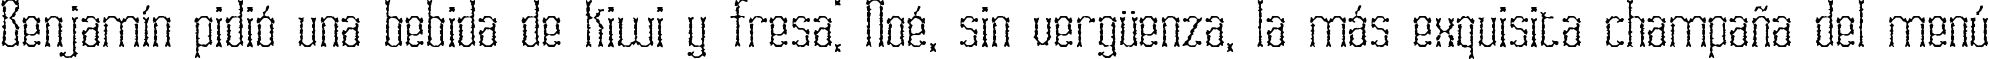 Пример написания шрифтом Fascii Scraggly BRK текста на испанском